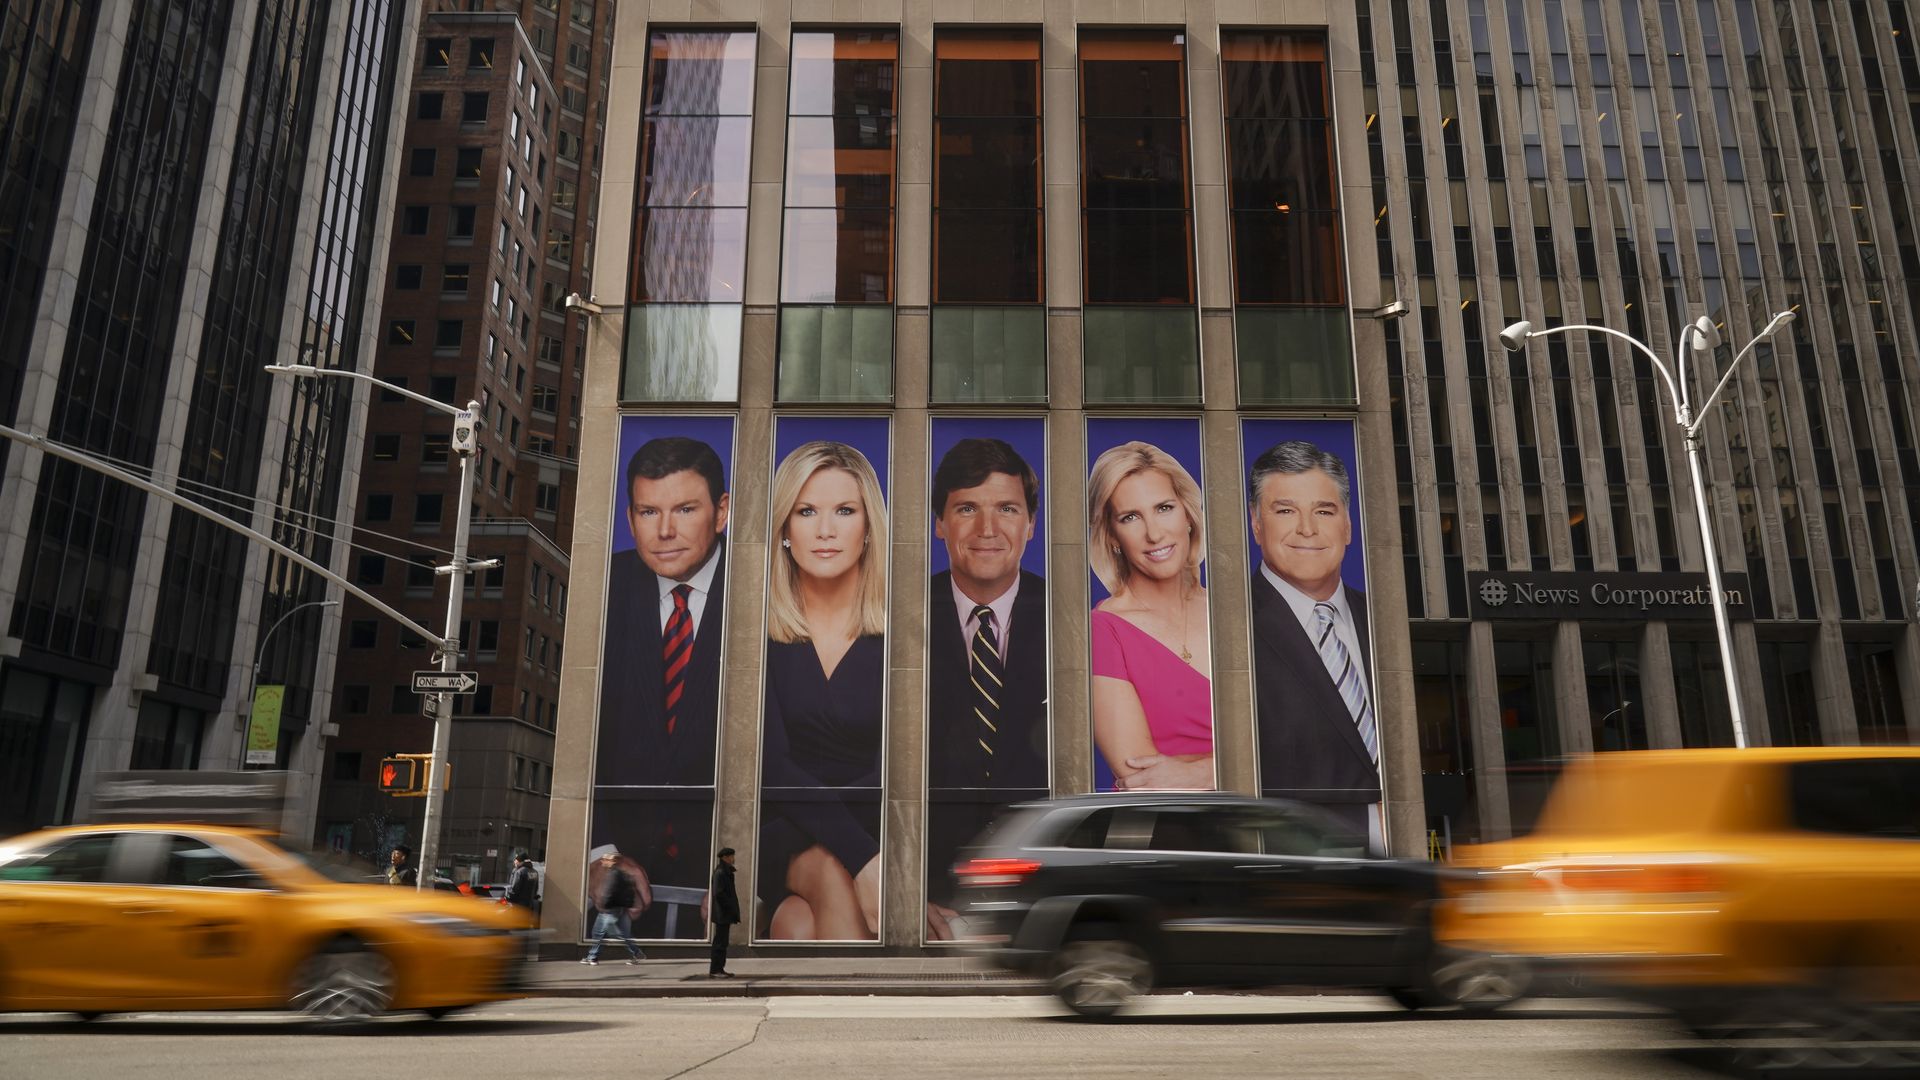 Fox News advertising in New York City